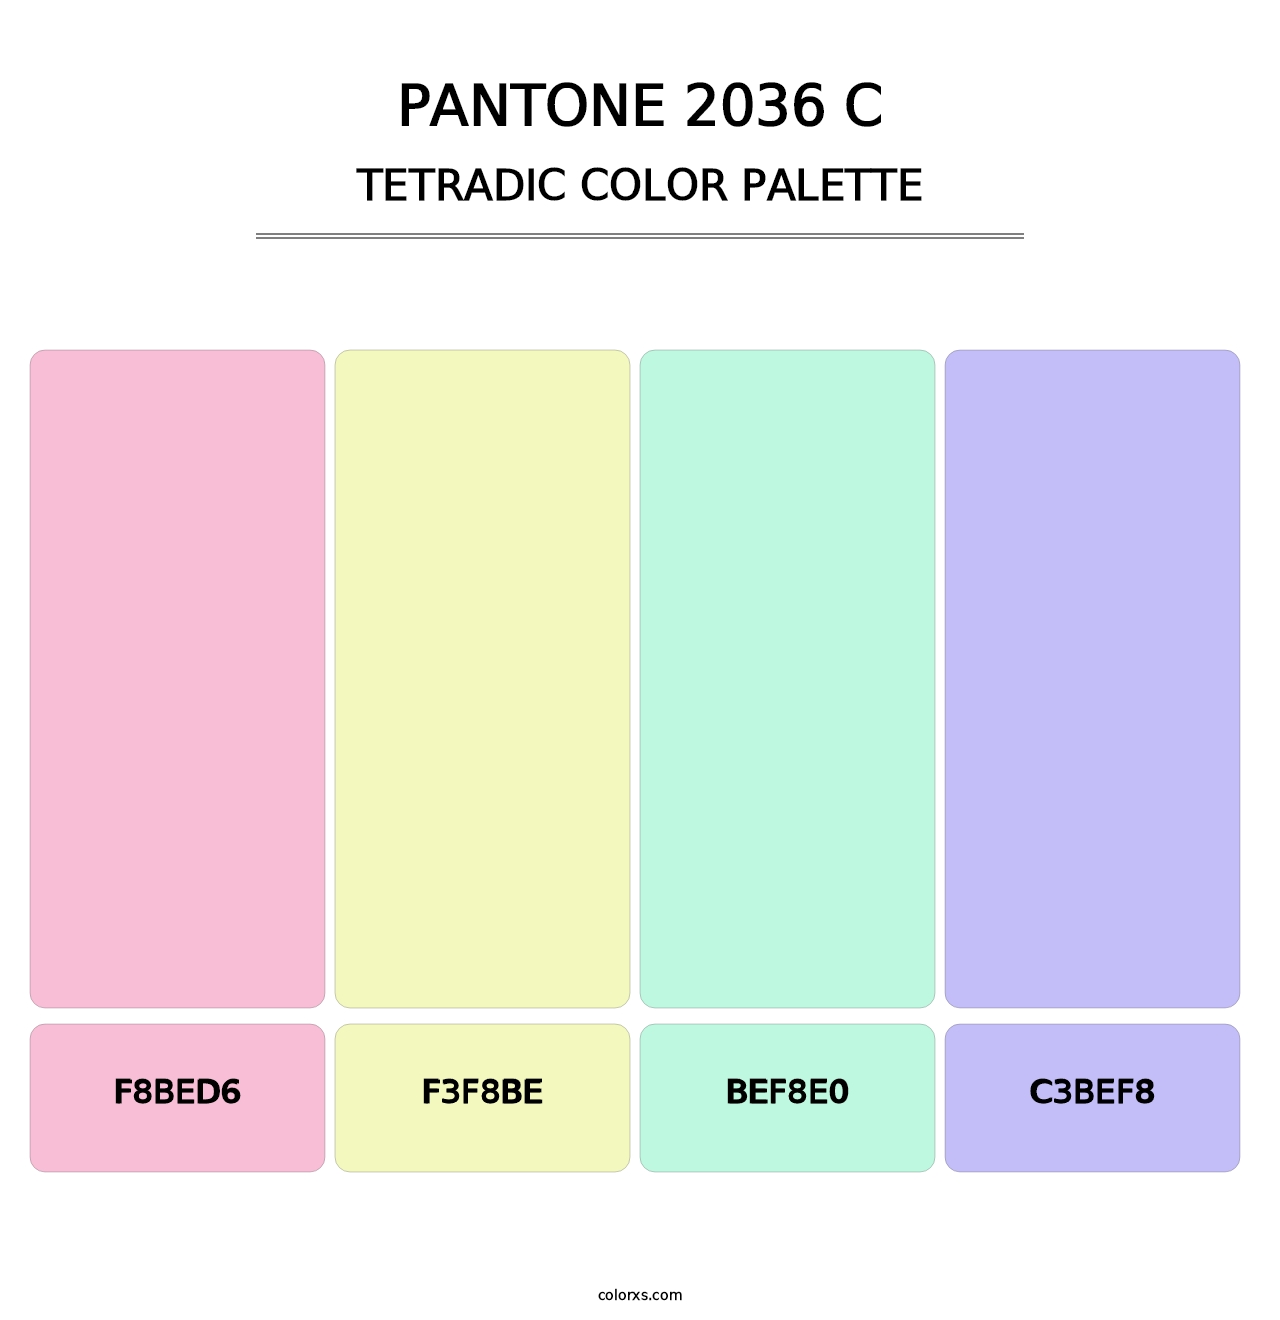 PANTONE 2036 C - Tetradic Color Palette